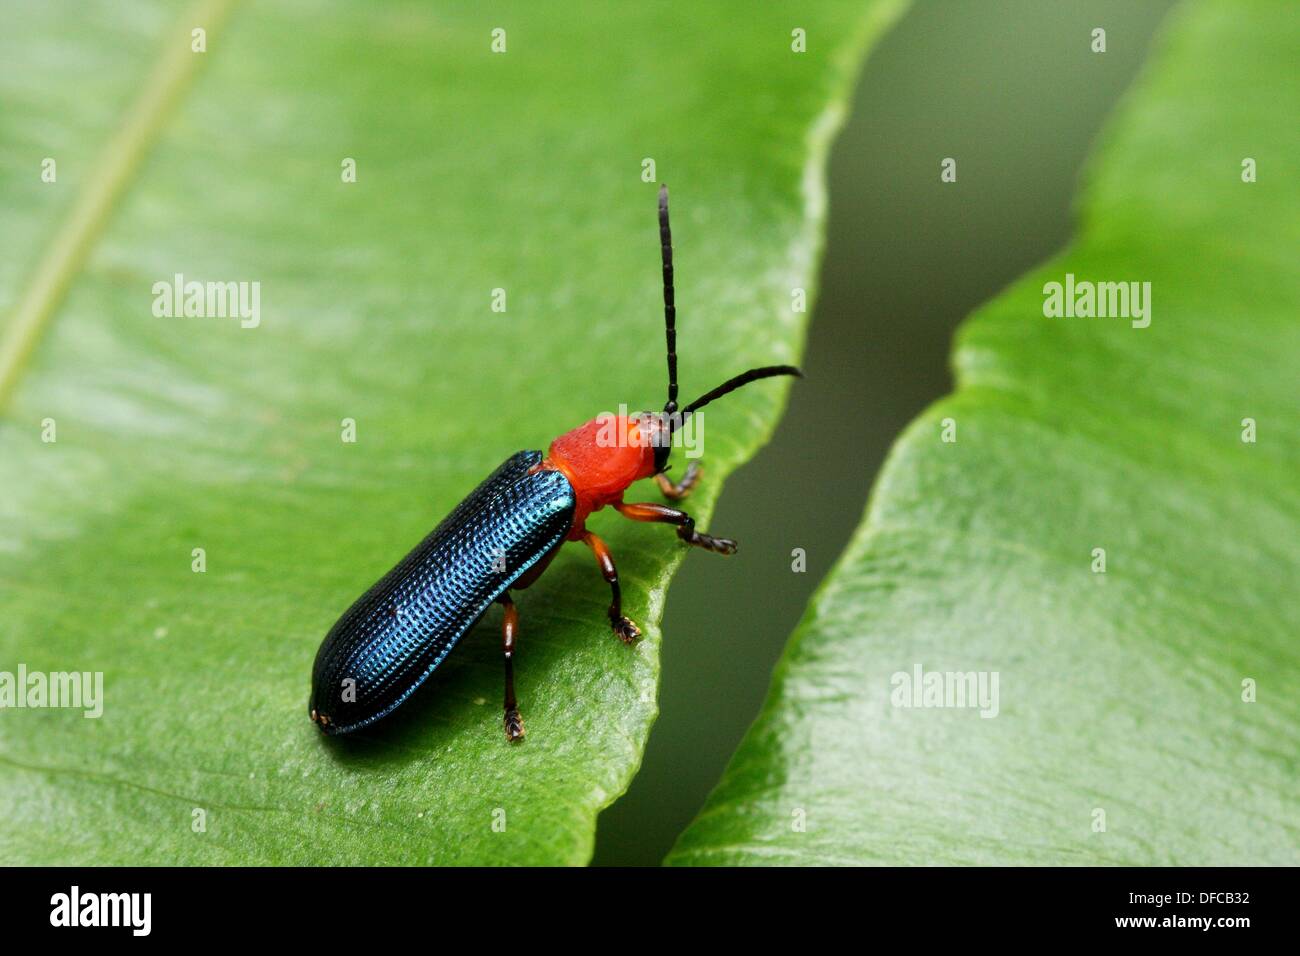 Calosoma sycophanta beetles hi-res stock photography and images - Alamy